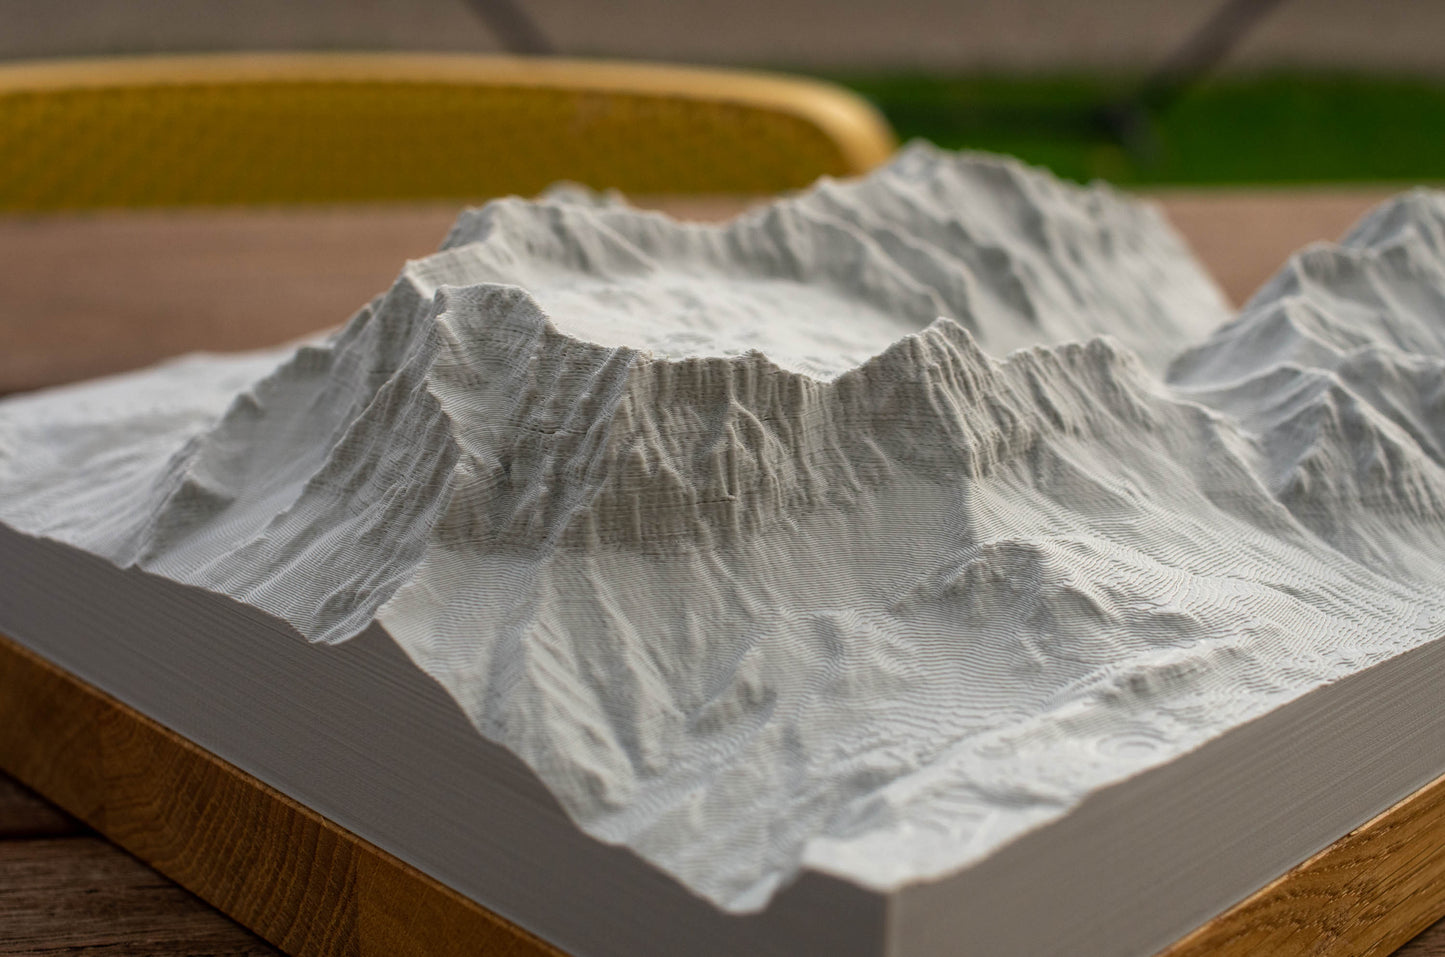 Relief "Oak" Zugspitze with anniversary ridge